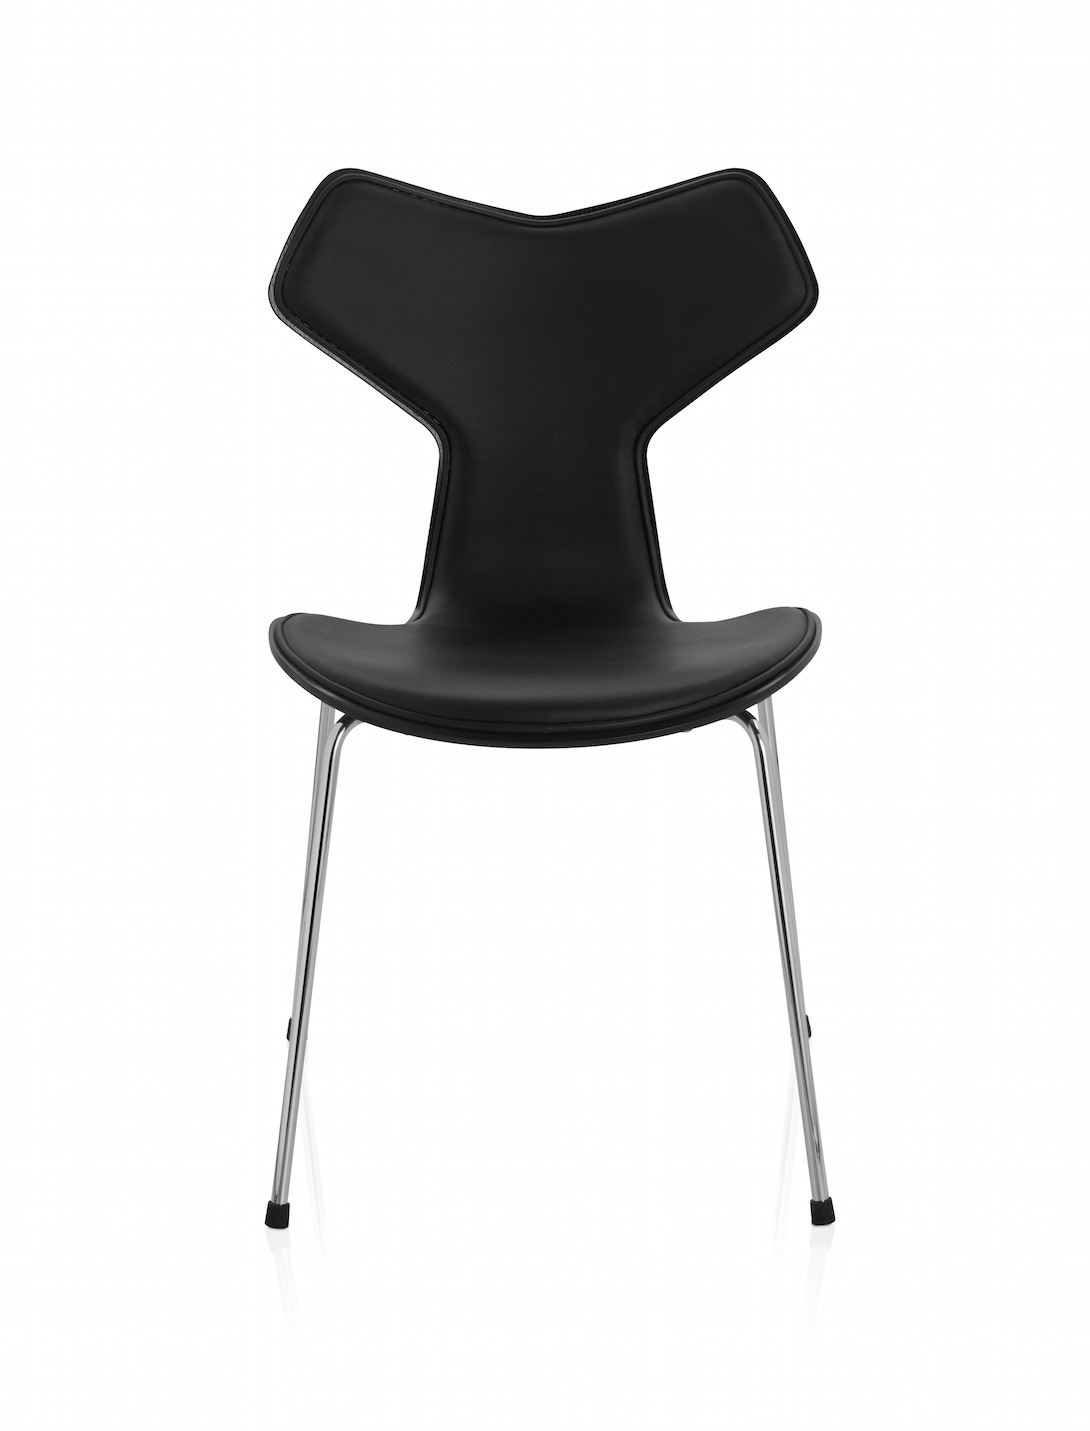 La sedia 3130 progettata da Arne Jacobsen nel 1957, poi ribattezzata Grand Prix.